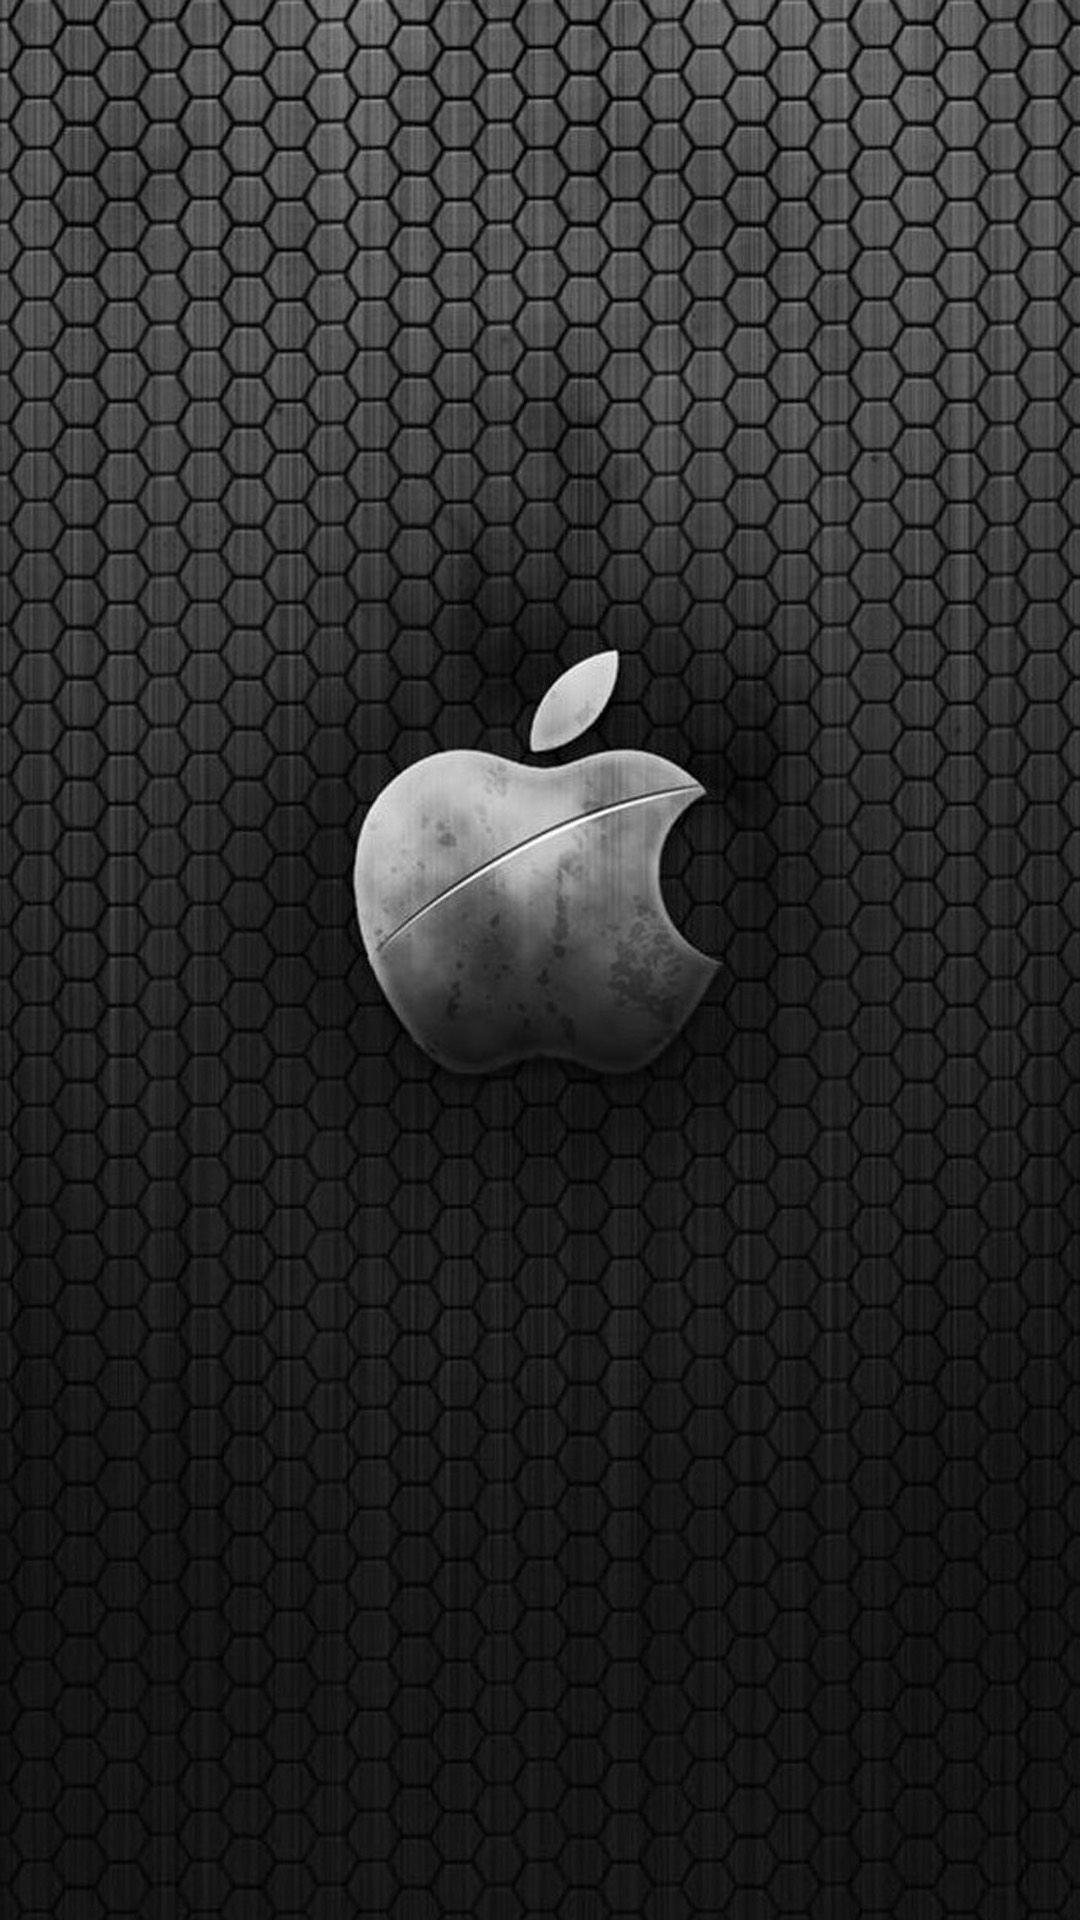 Metallic Apple logo wallpaper